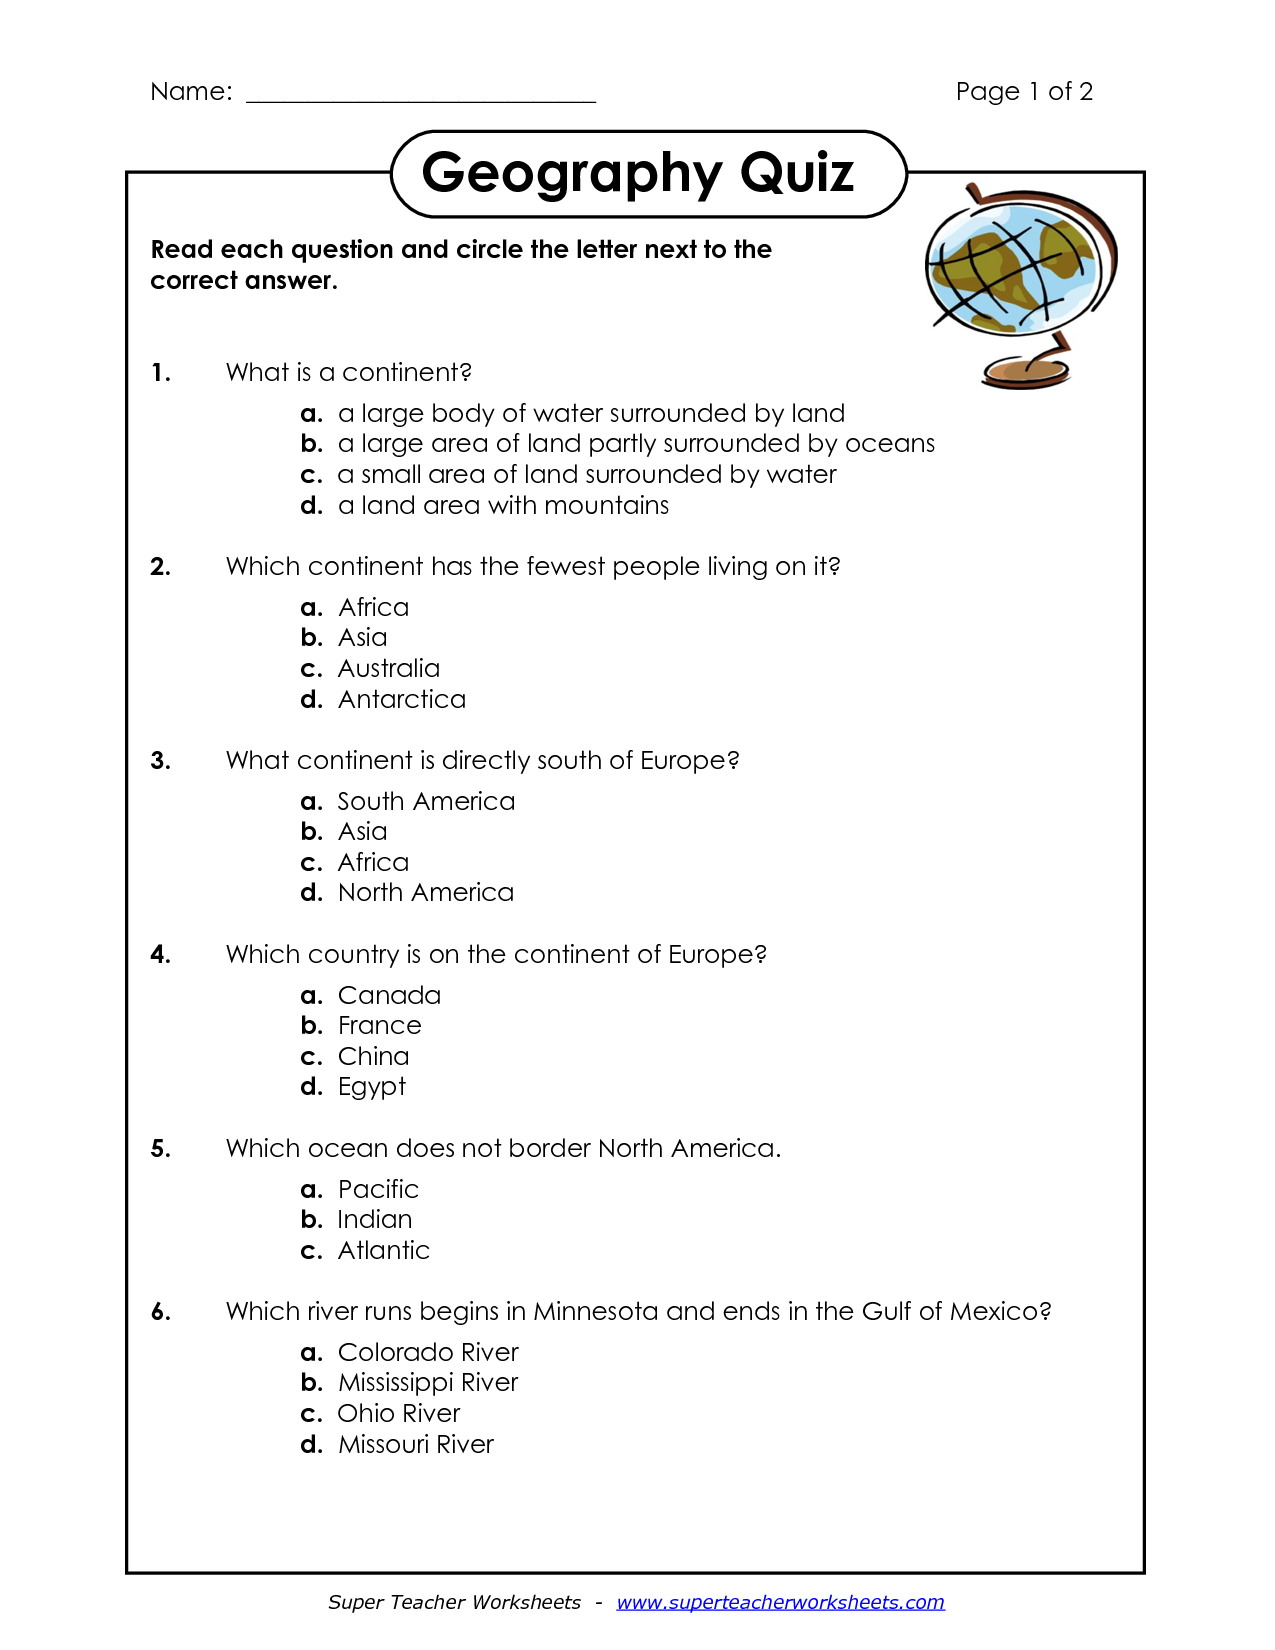 math-worksheet-category-page-1-worksheeto